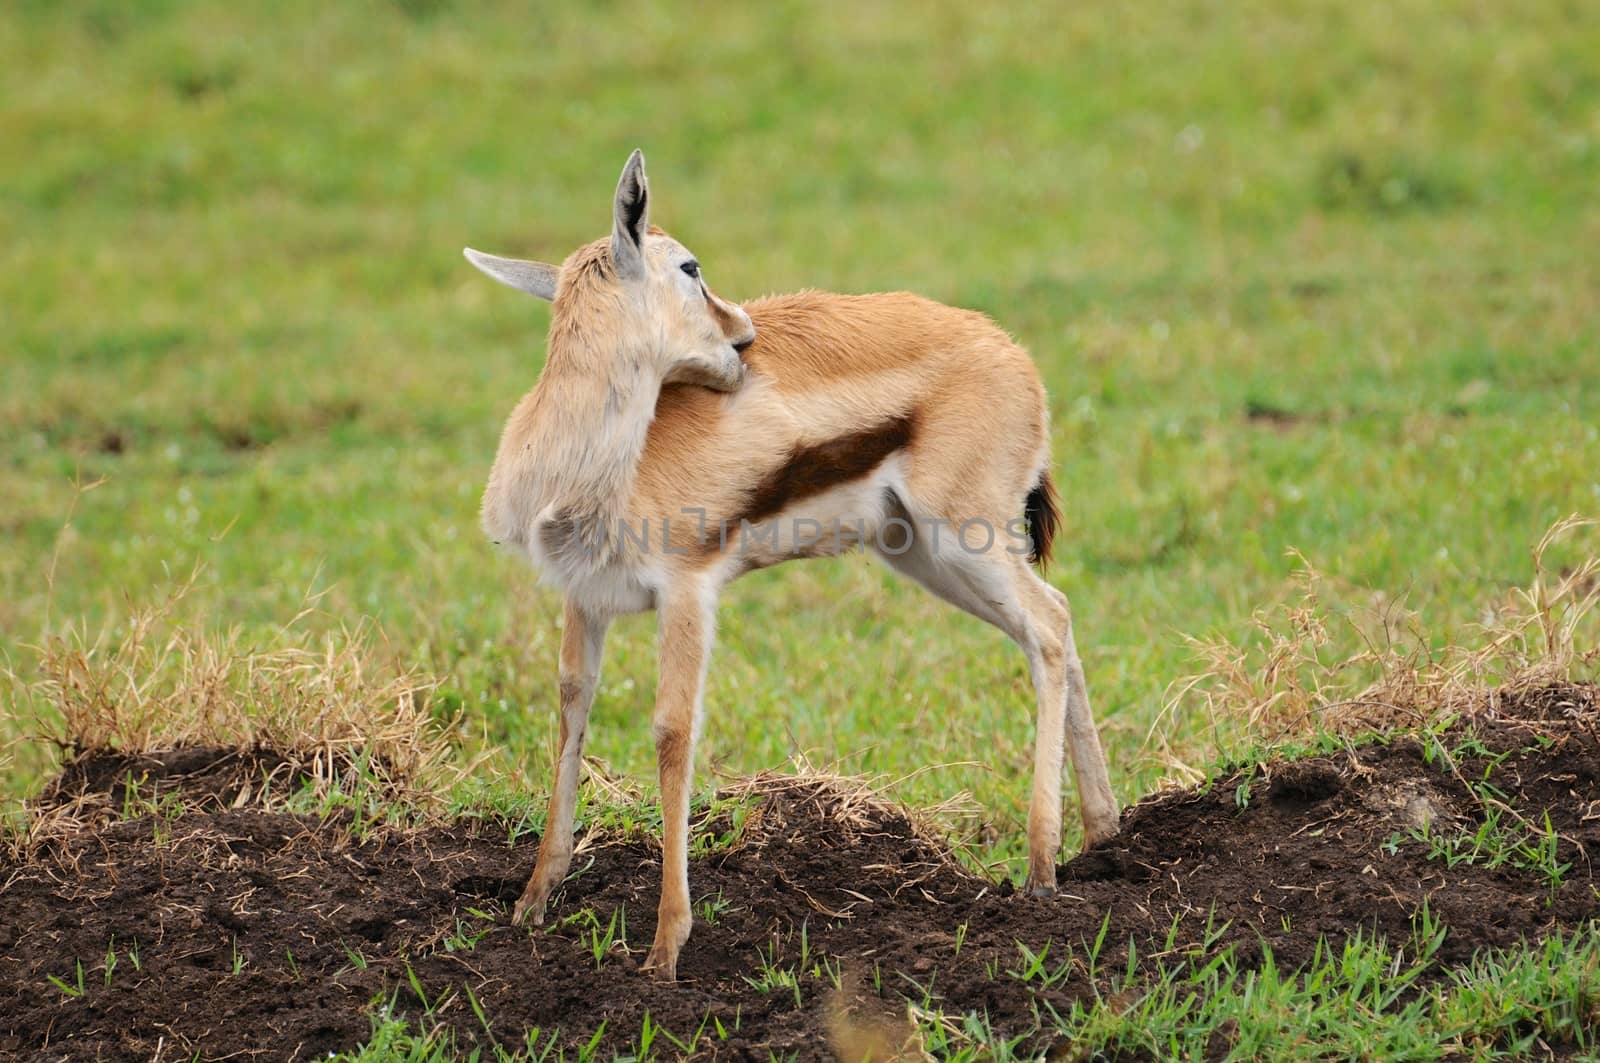 impala in national park Tanzania by moizhusein